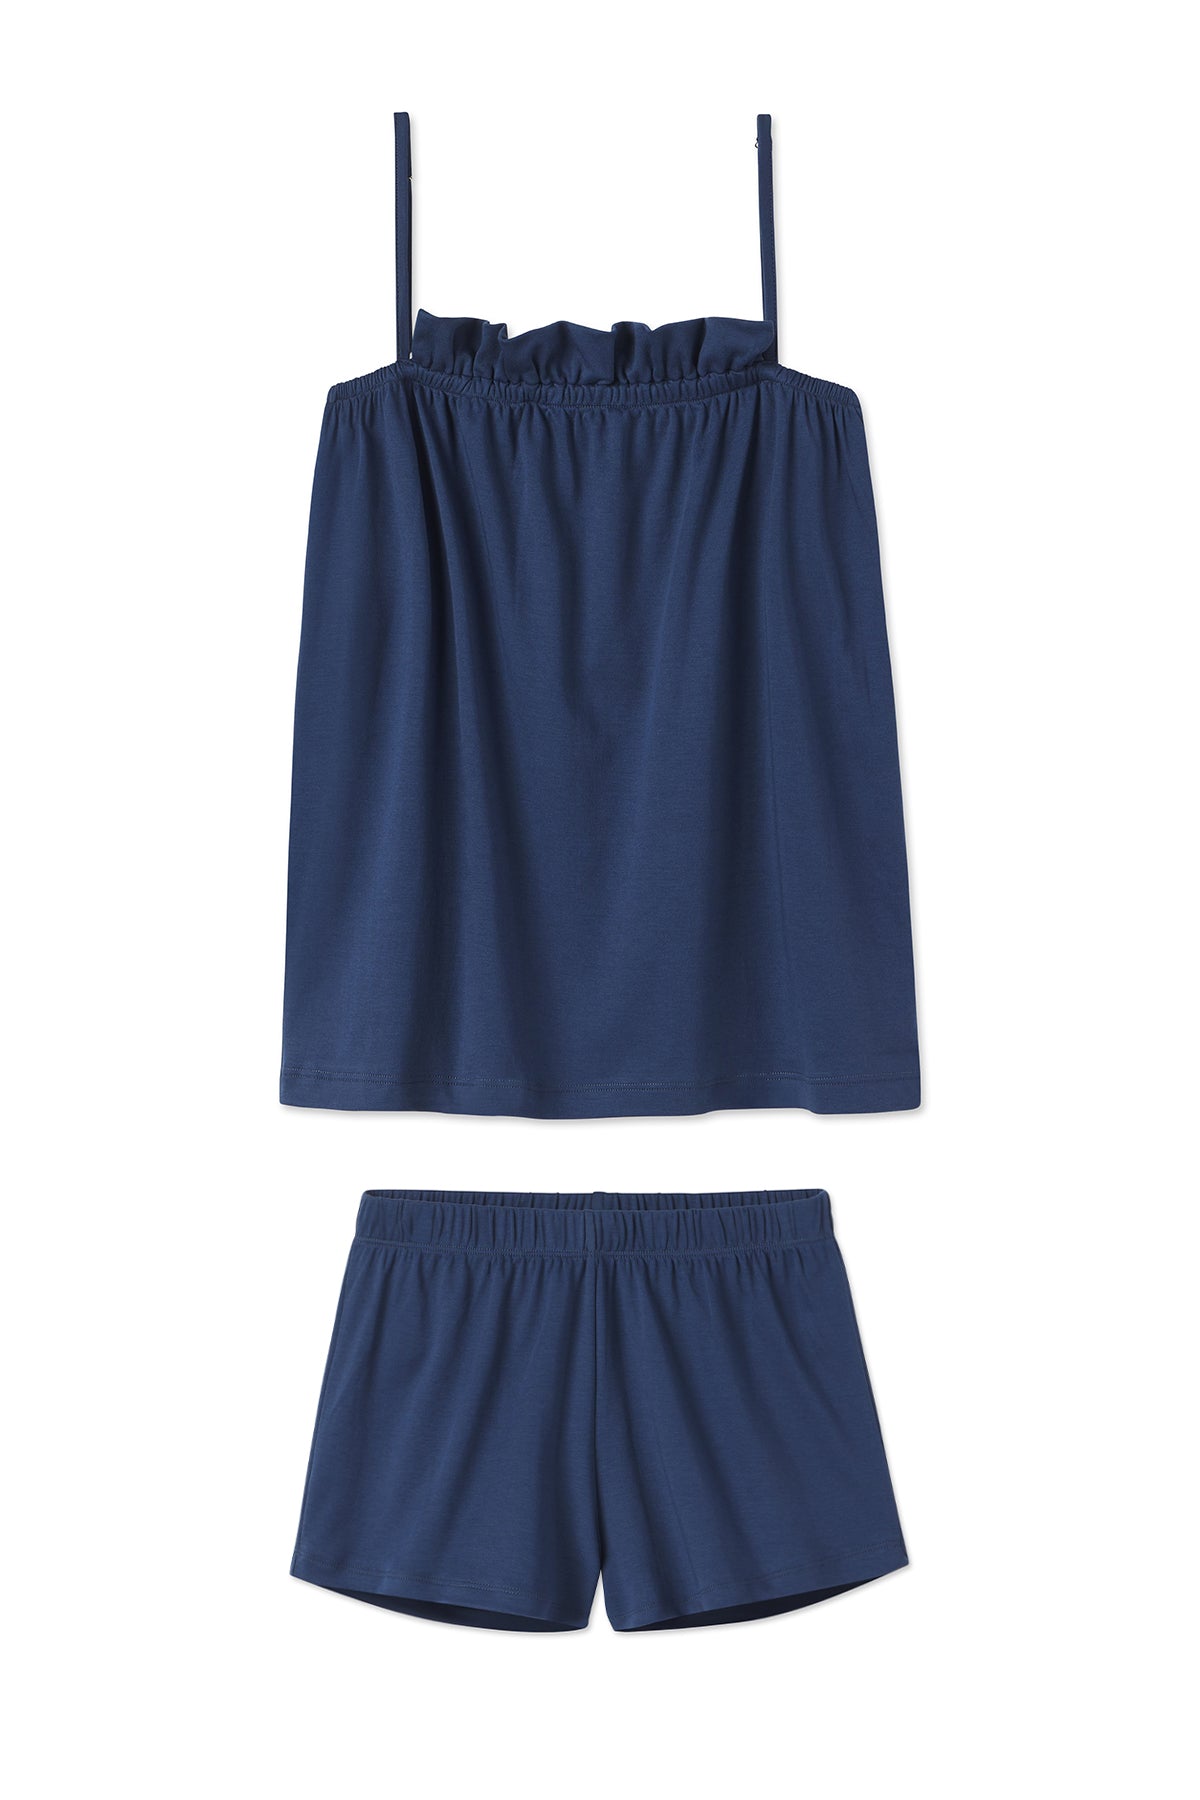 GOTOTOP Women's Pajamas Bra Shorts Set Lingerie Beautiful Lace Ruffles  Nightwear Two Piece Sleepwear Pajamas (Brown) : : Clothing, Shoes  & Accessories